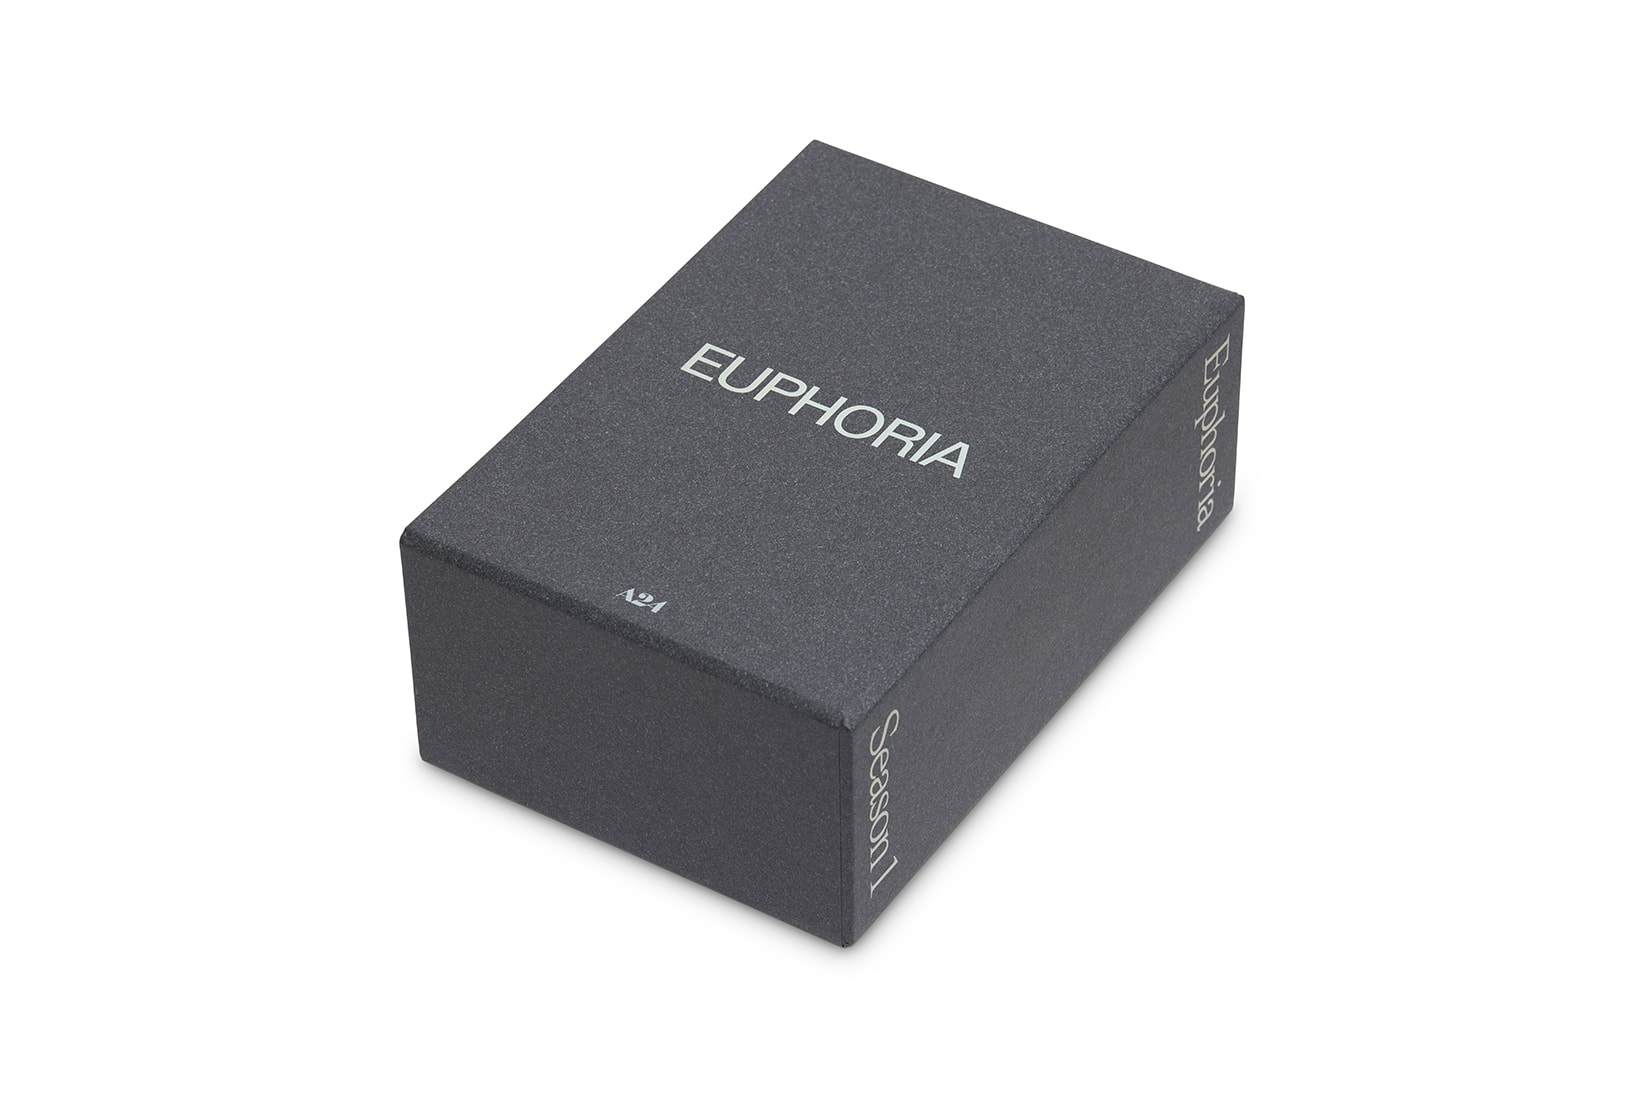 The Euphoria Books: S1 Boxed Set A24